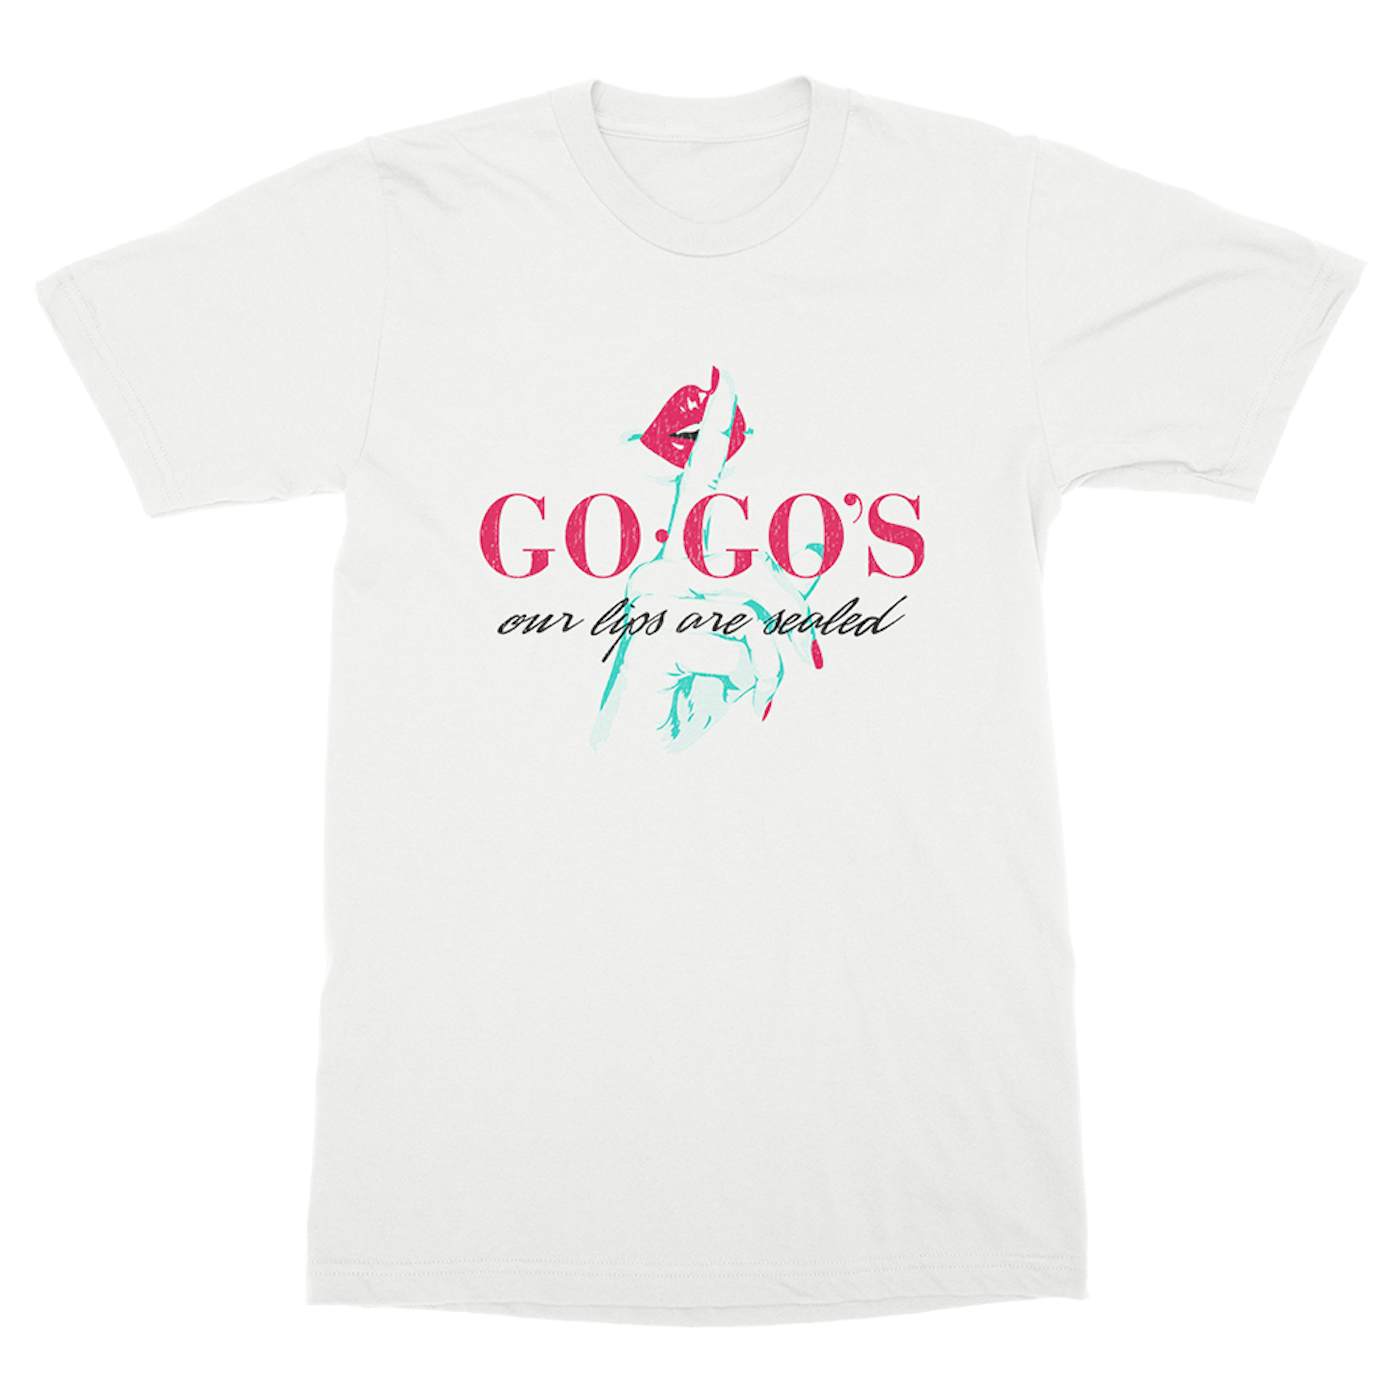 The Go-Go's Sealed T-Shirt